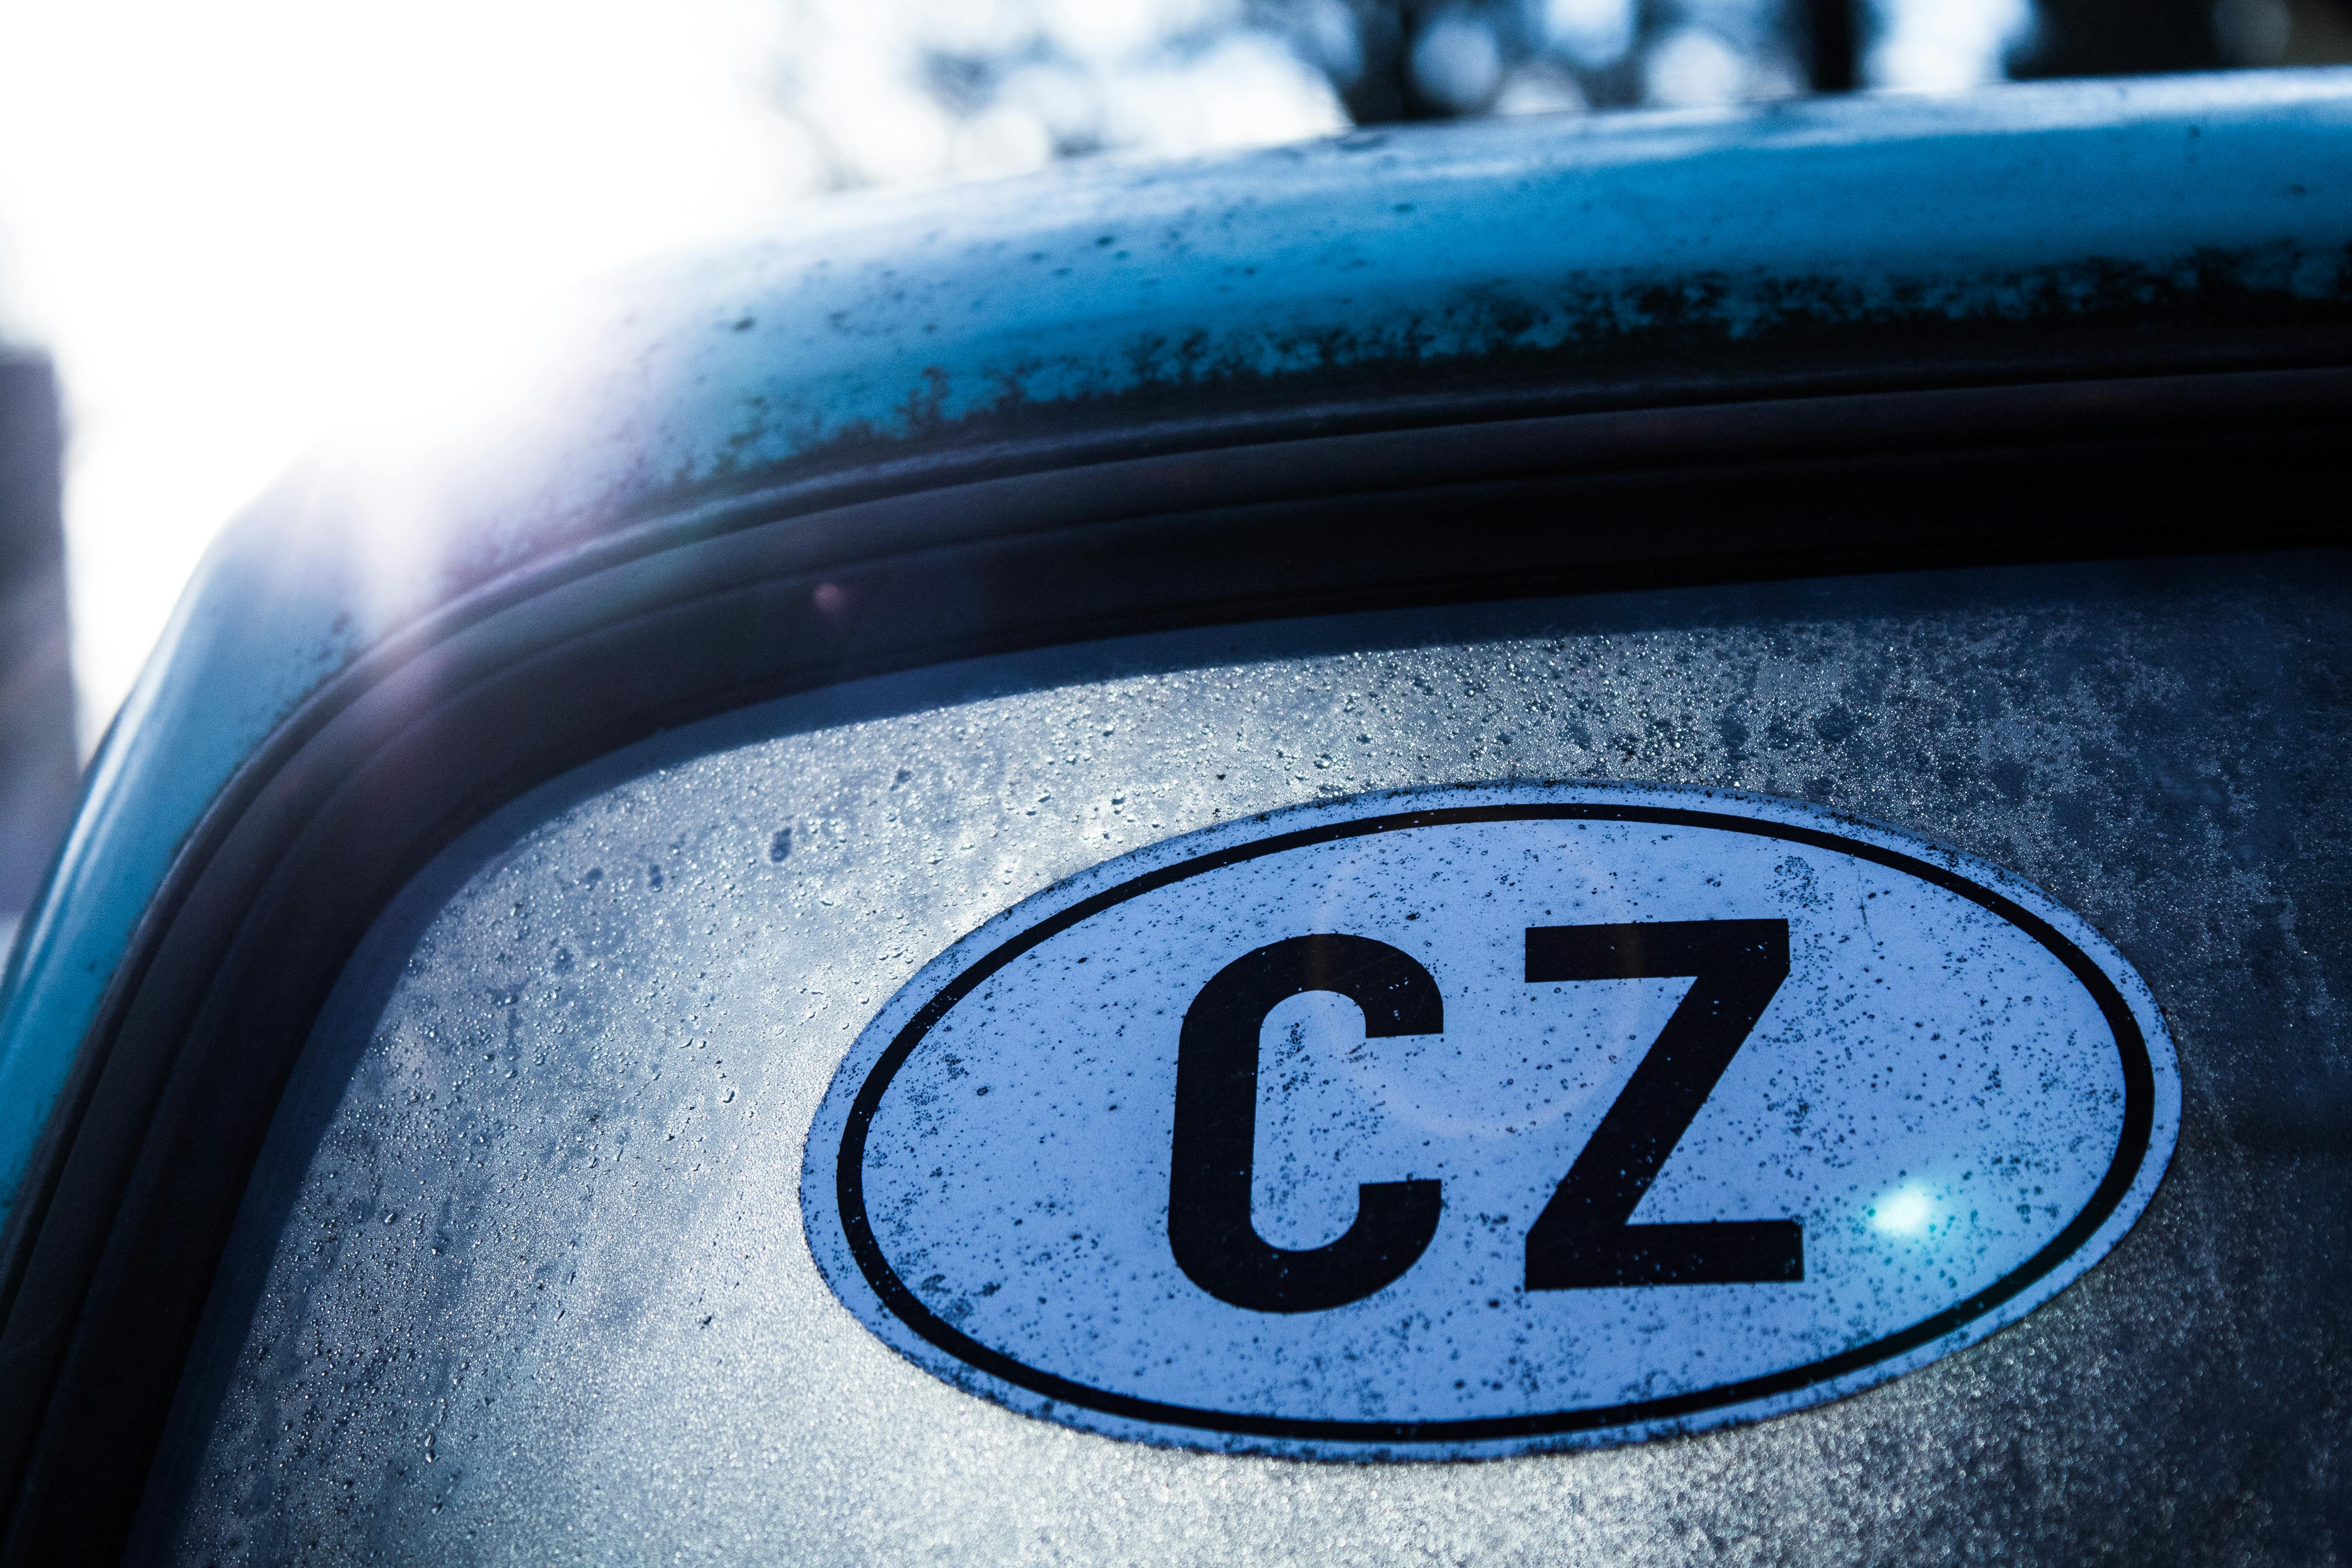 Free stock photo of #czechrepublic #car #ice #winter #sunshine #window